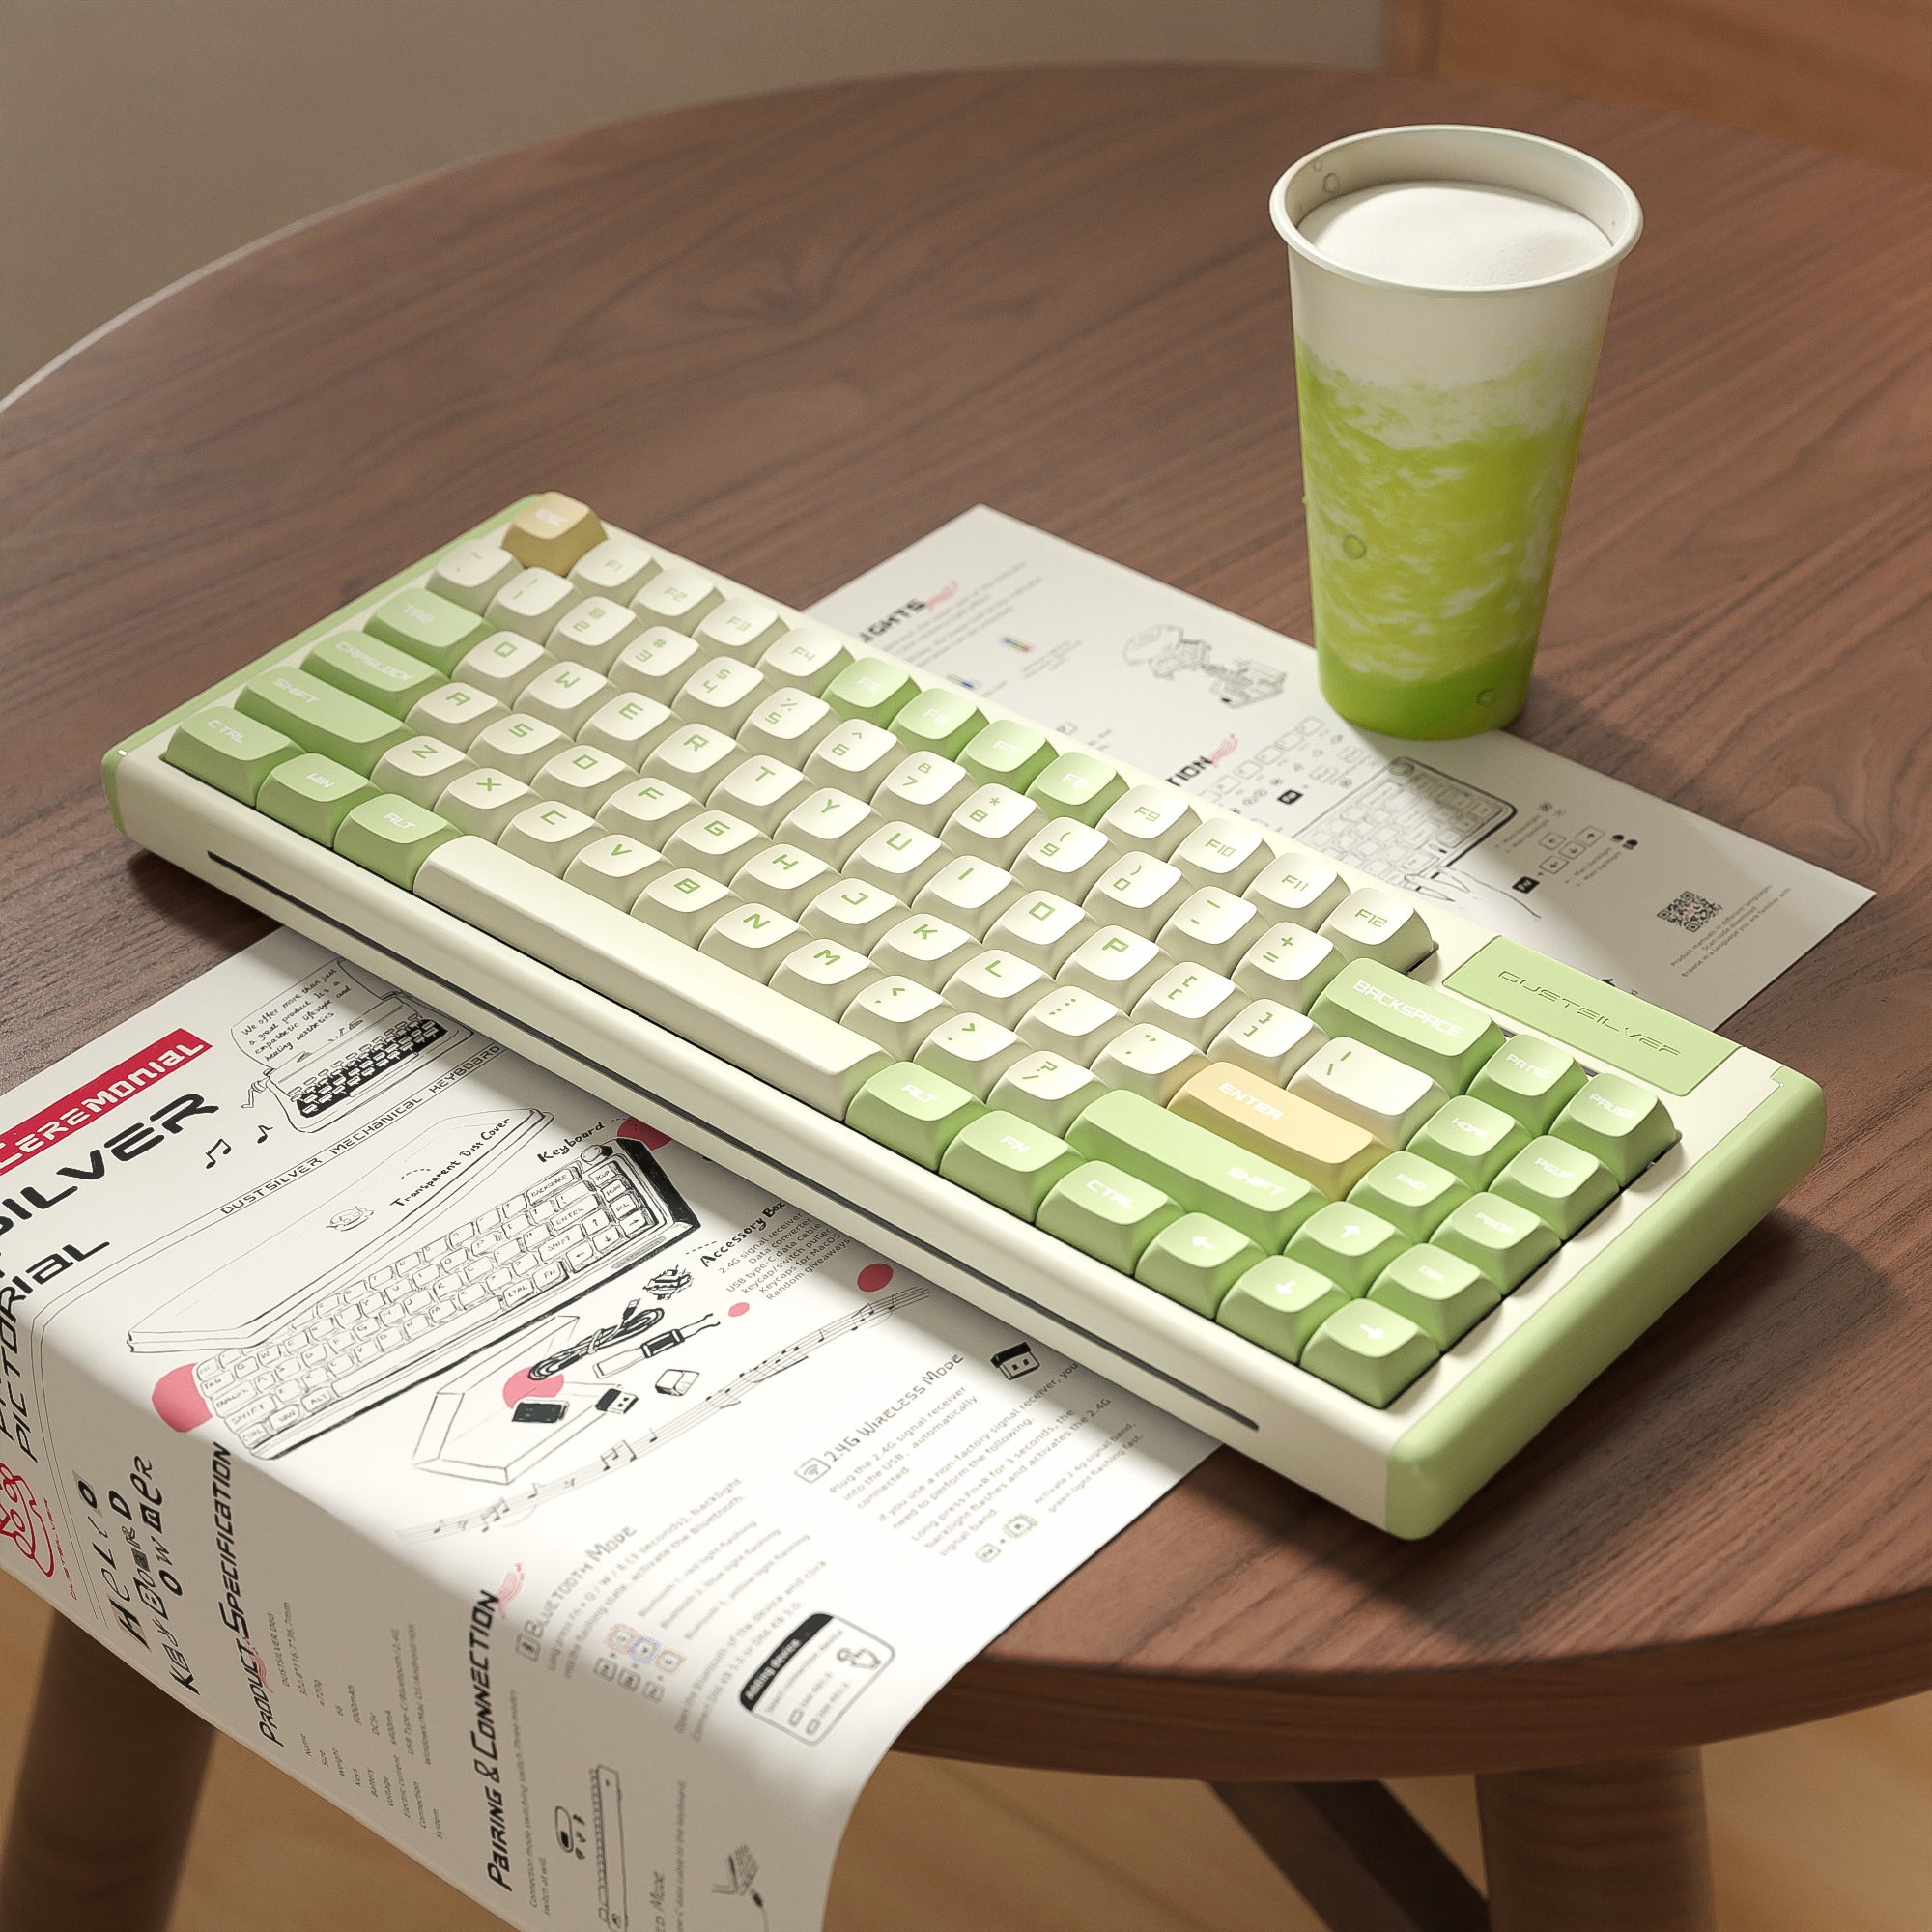 Dustsilver K84 Melon Shake Wired Hot Swappable Mechanical Keyboard Hot SALE